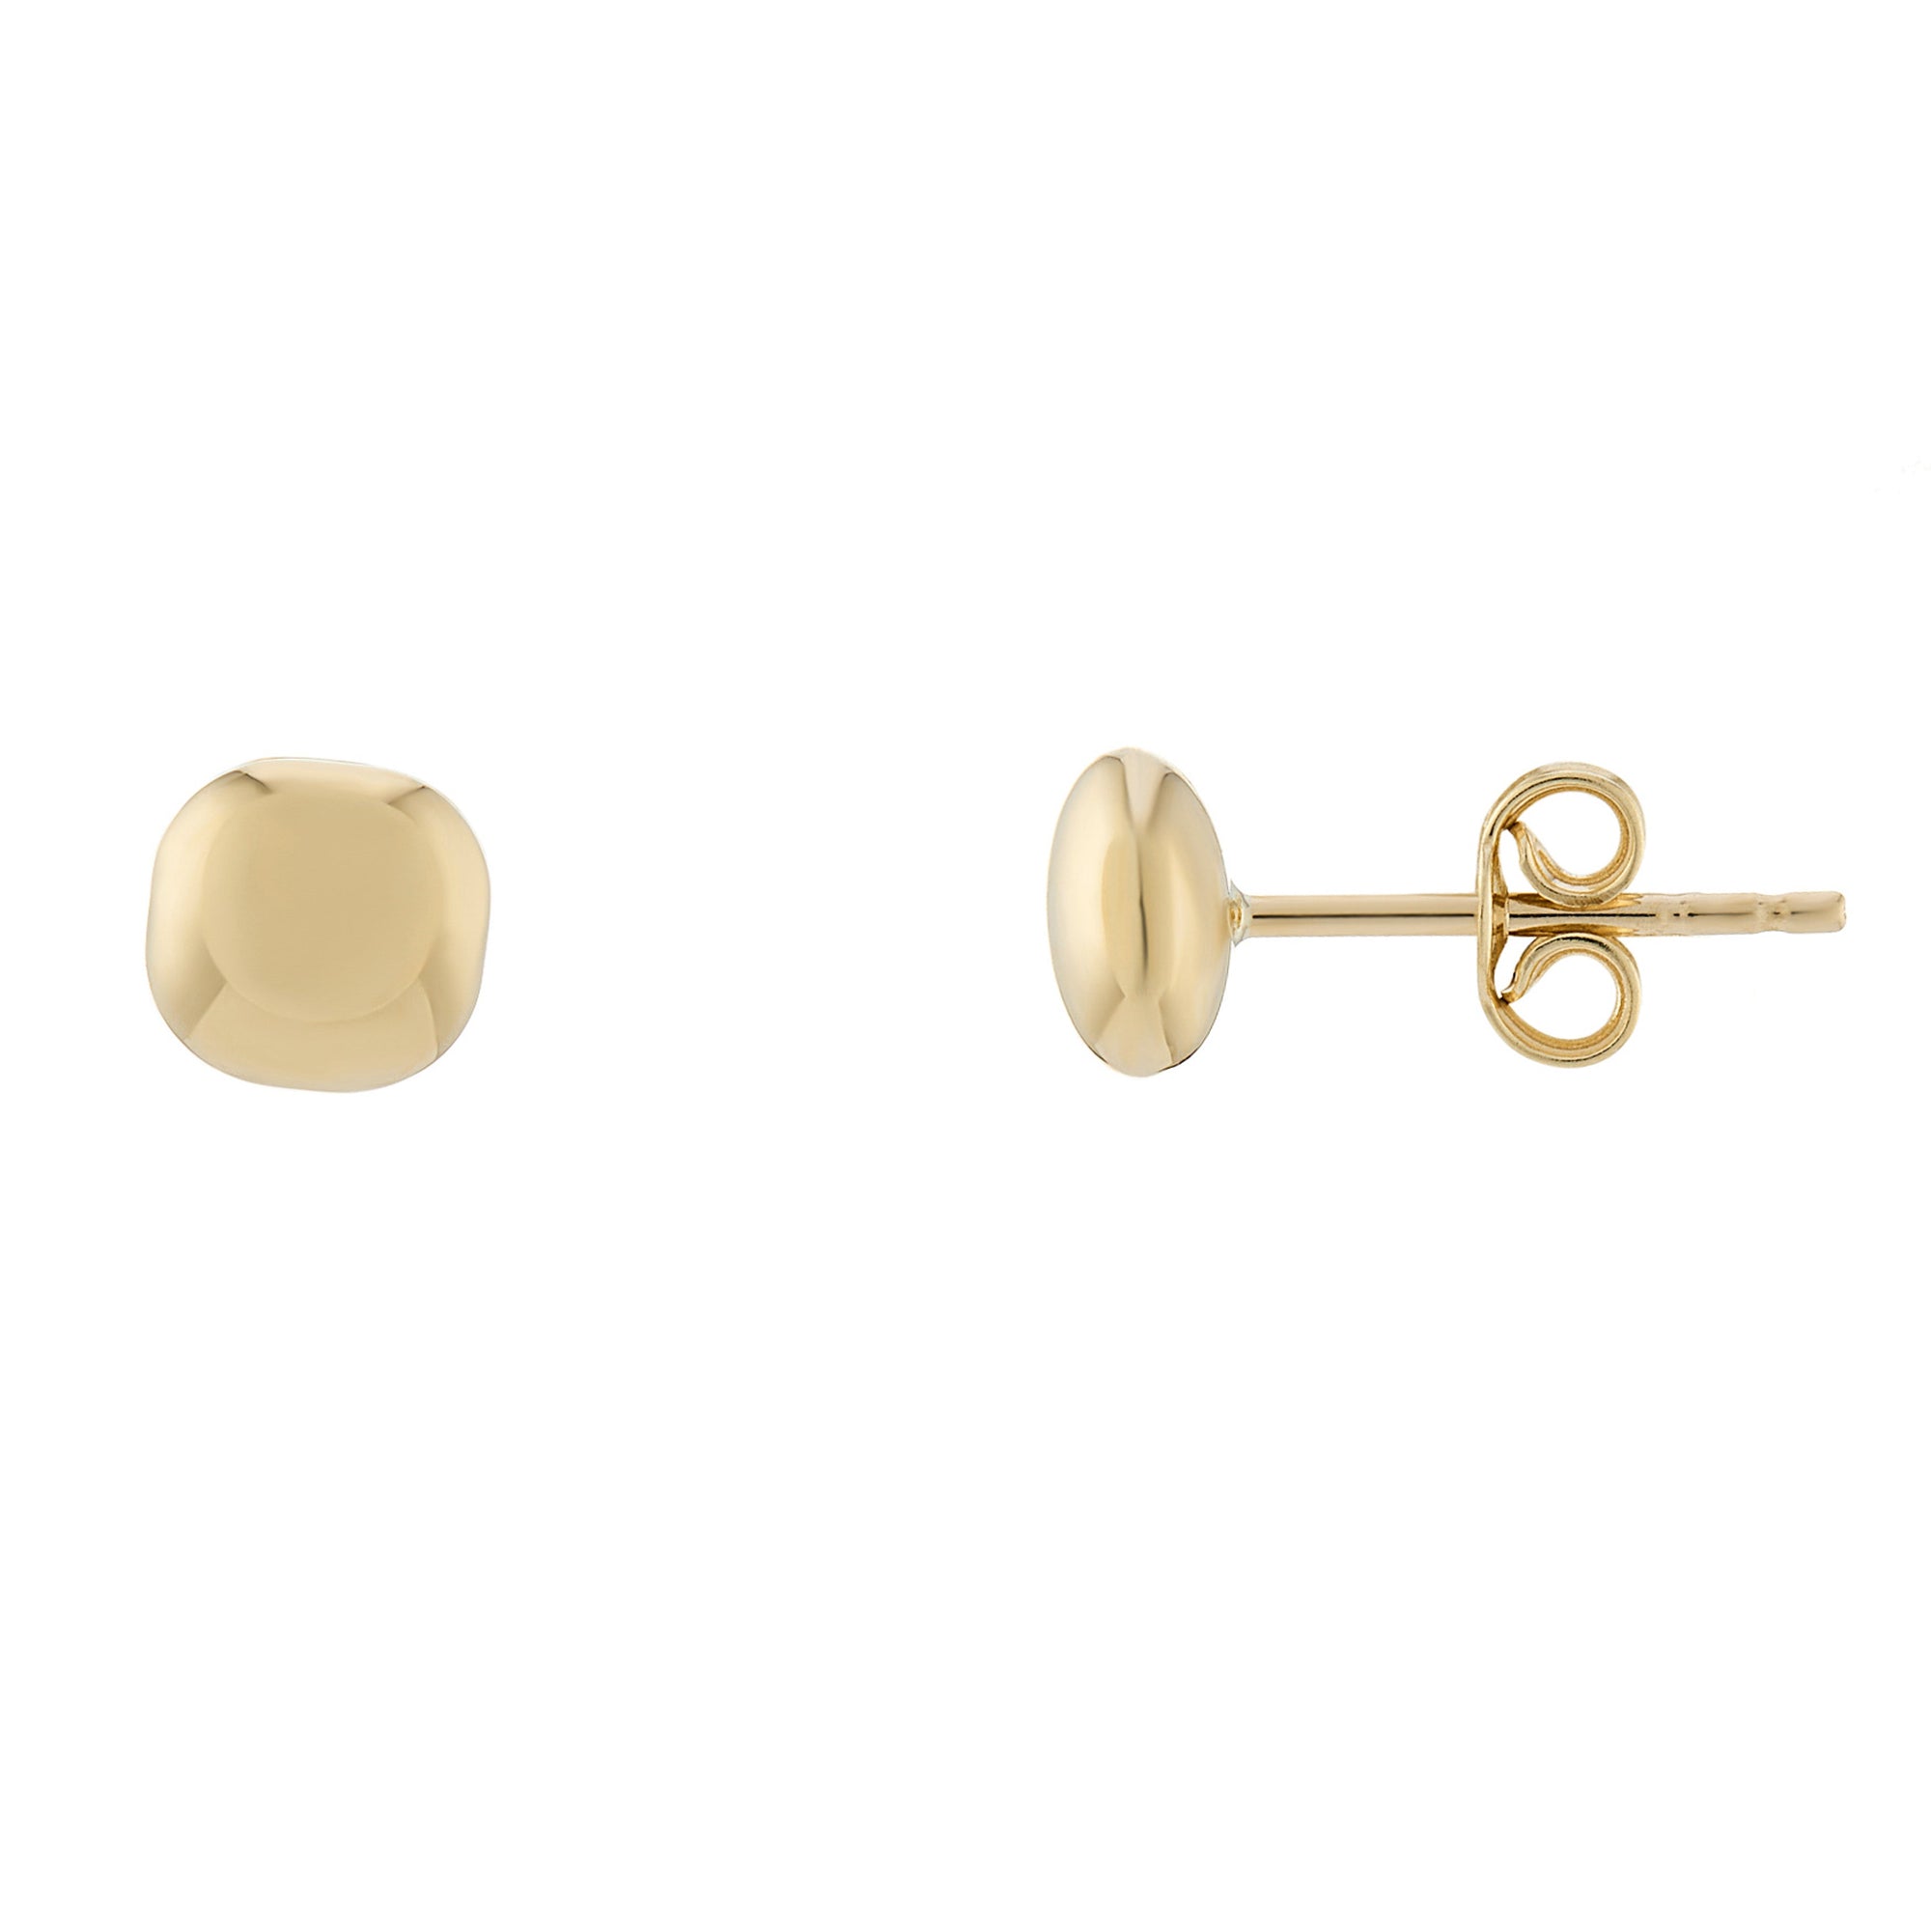 9ct gold 6mm plain cushion shape stud earrings